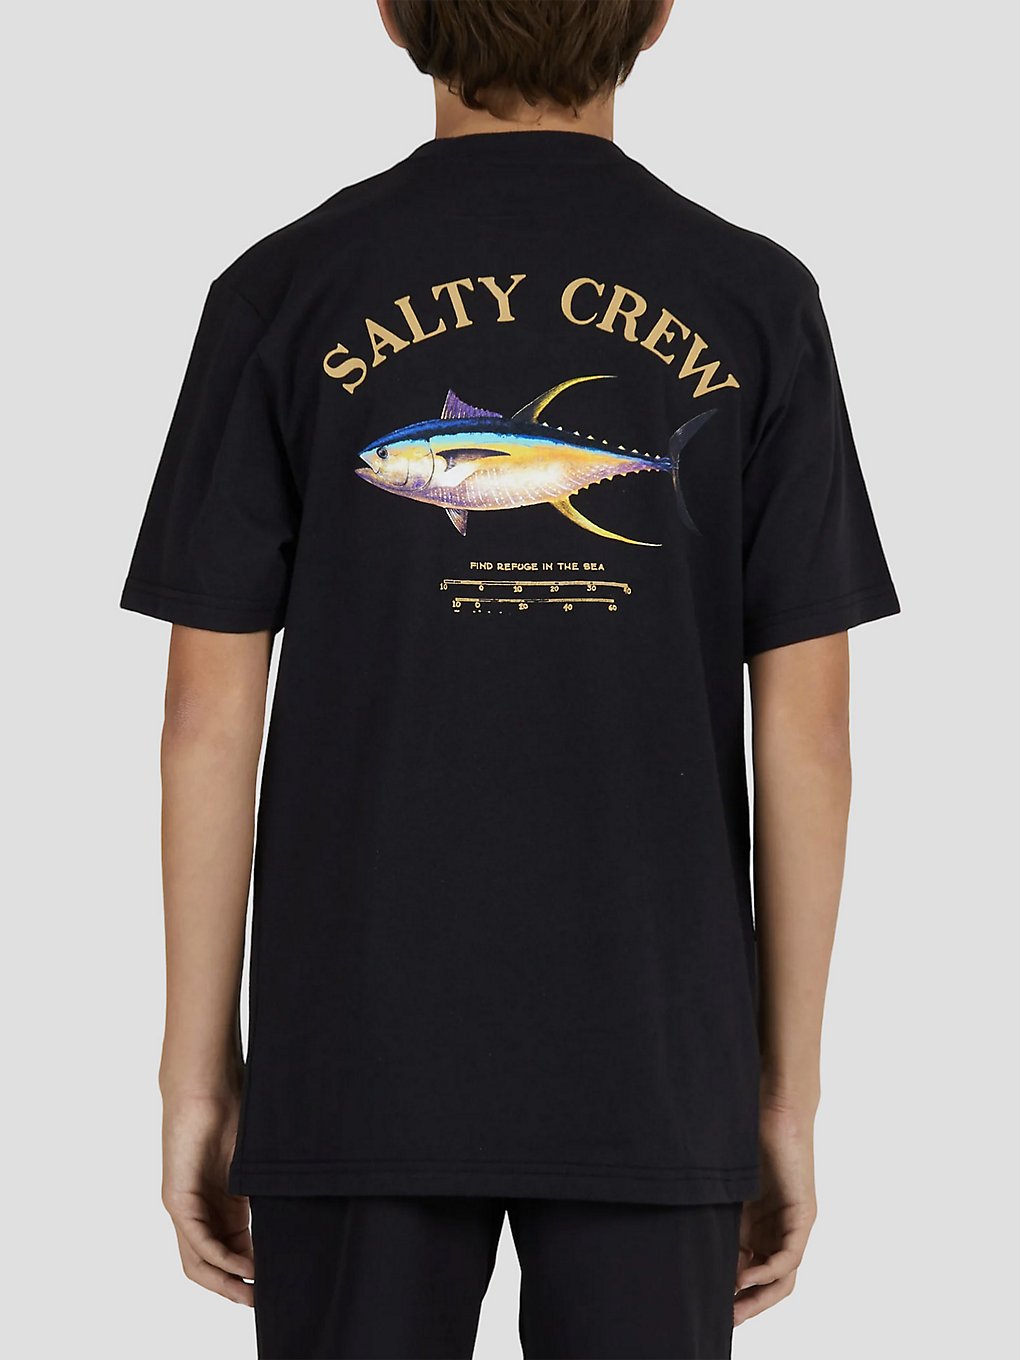 Salty Crew Ahi Mount T-Shirt black kaufen